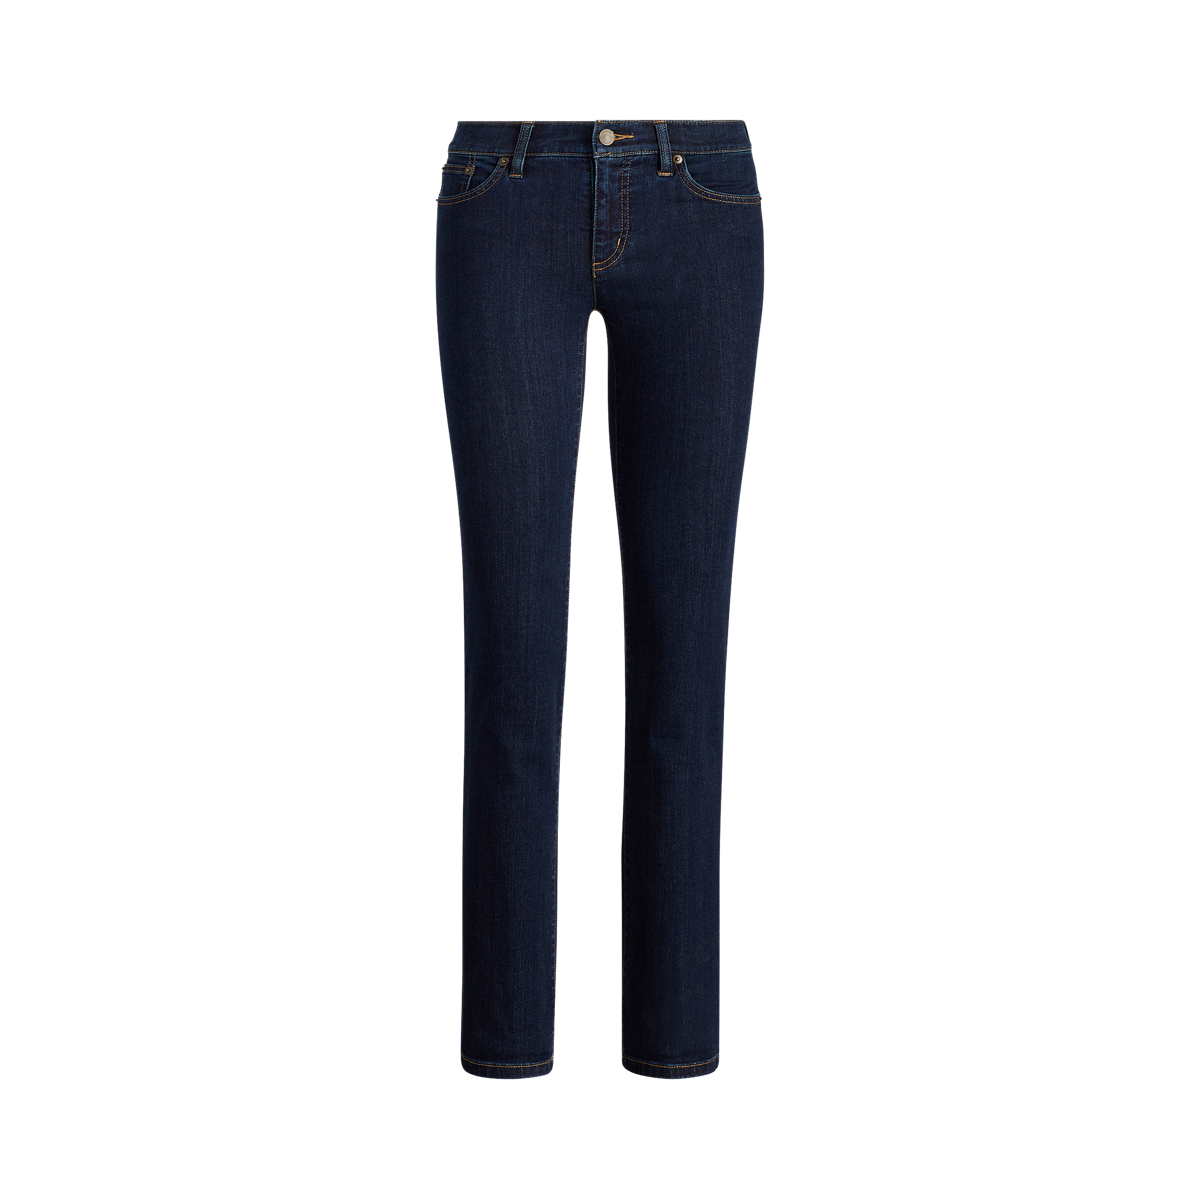 Aprender acerca 34+ imagen polo ralph lauren classic straight jeans